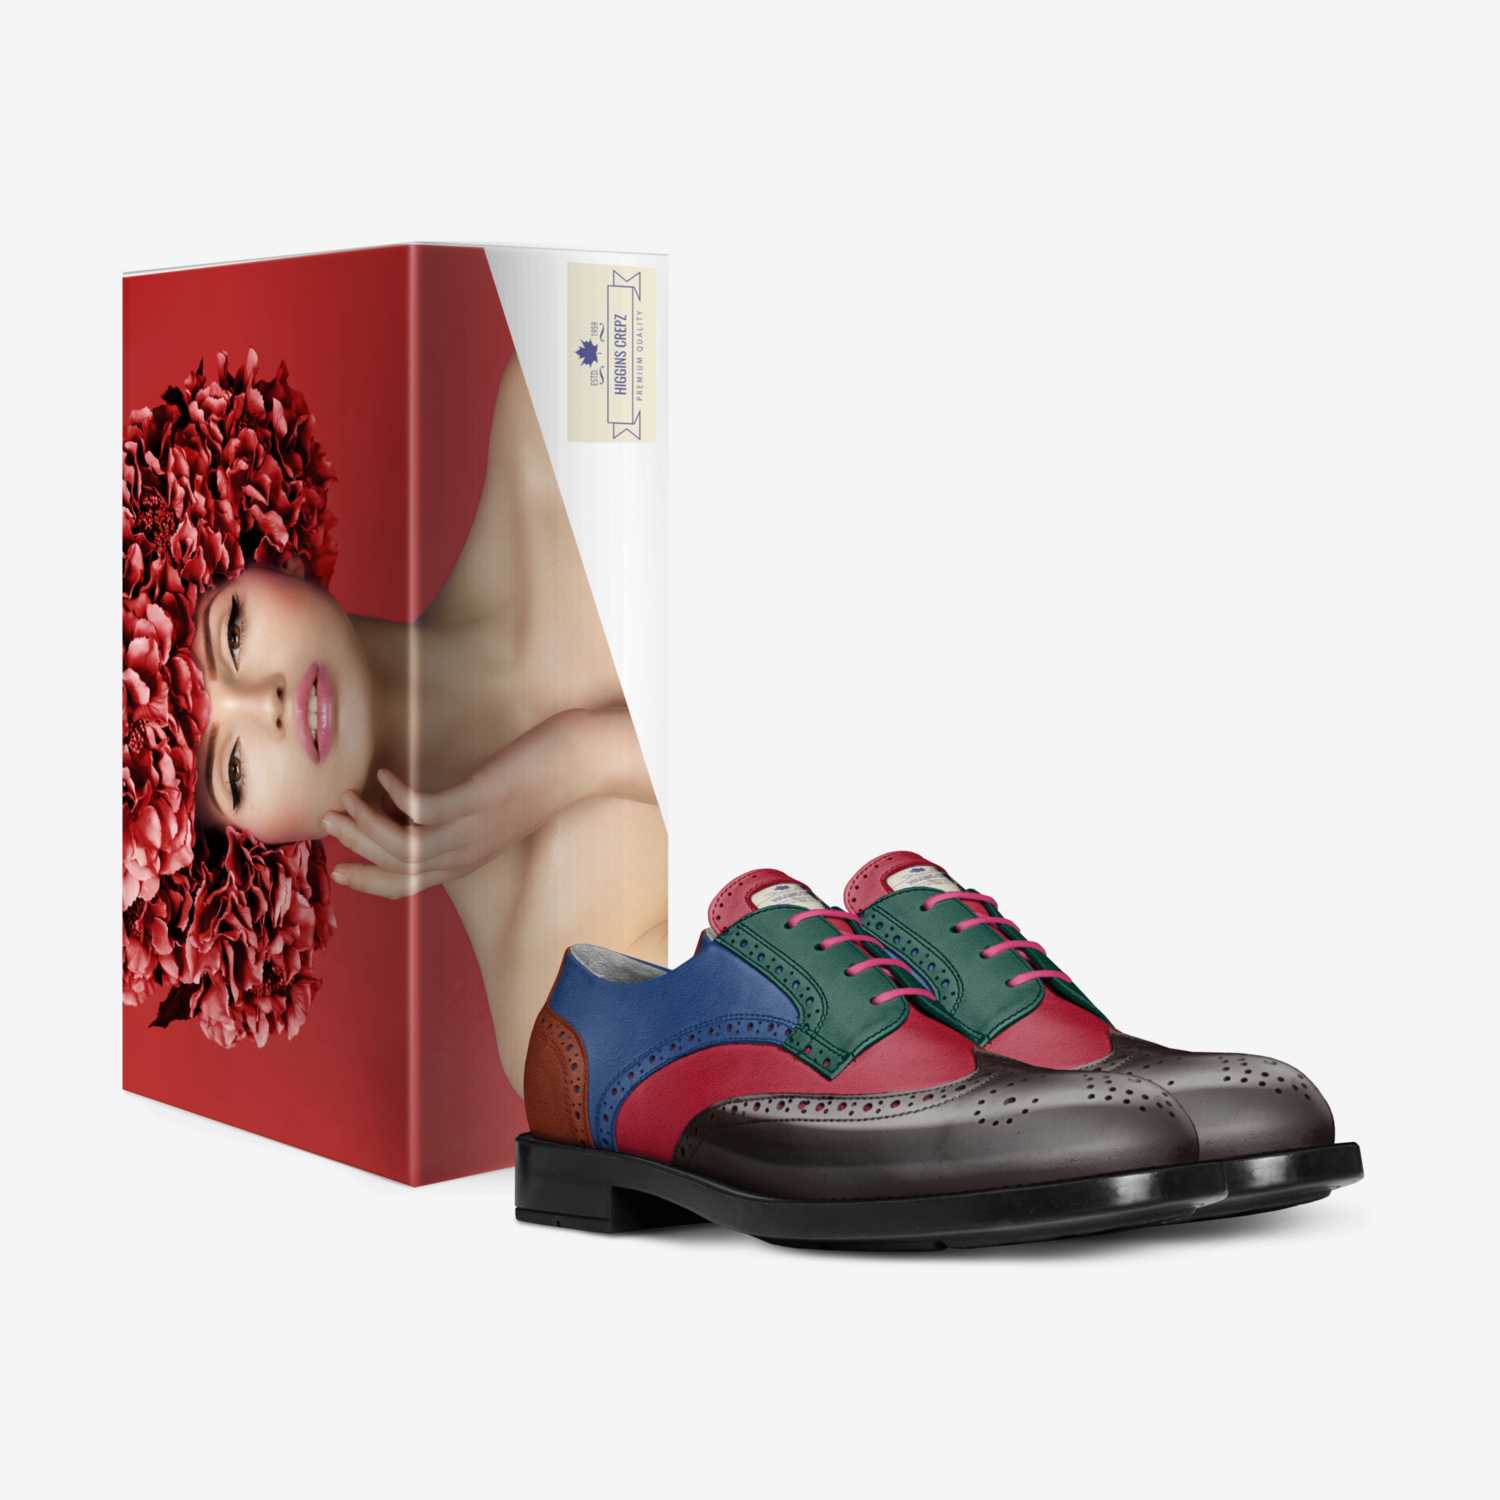 Higgins Crepz custom made in Italy shoes by Luke Higgins | Box view